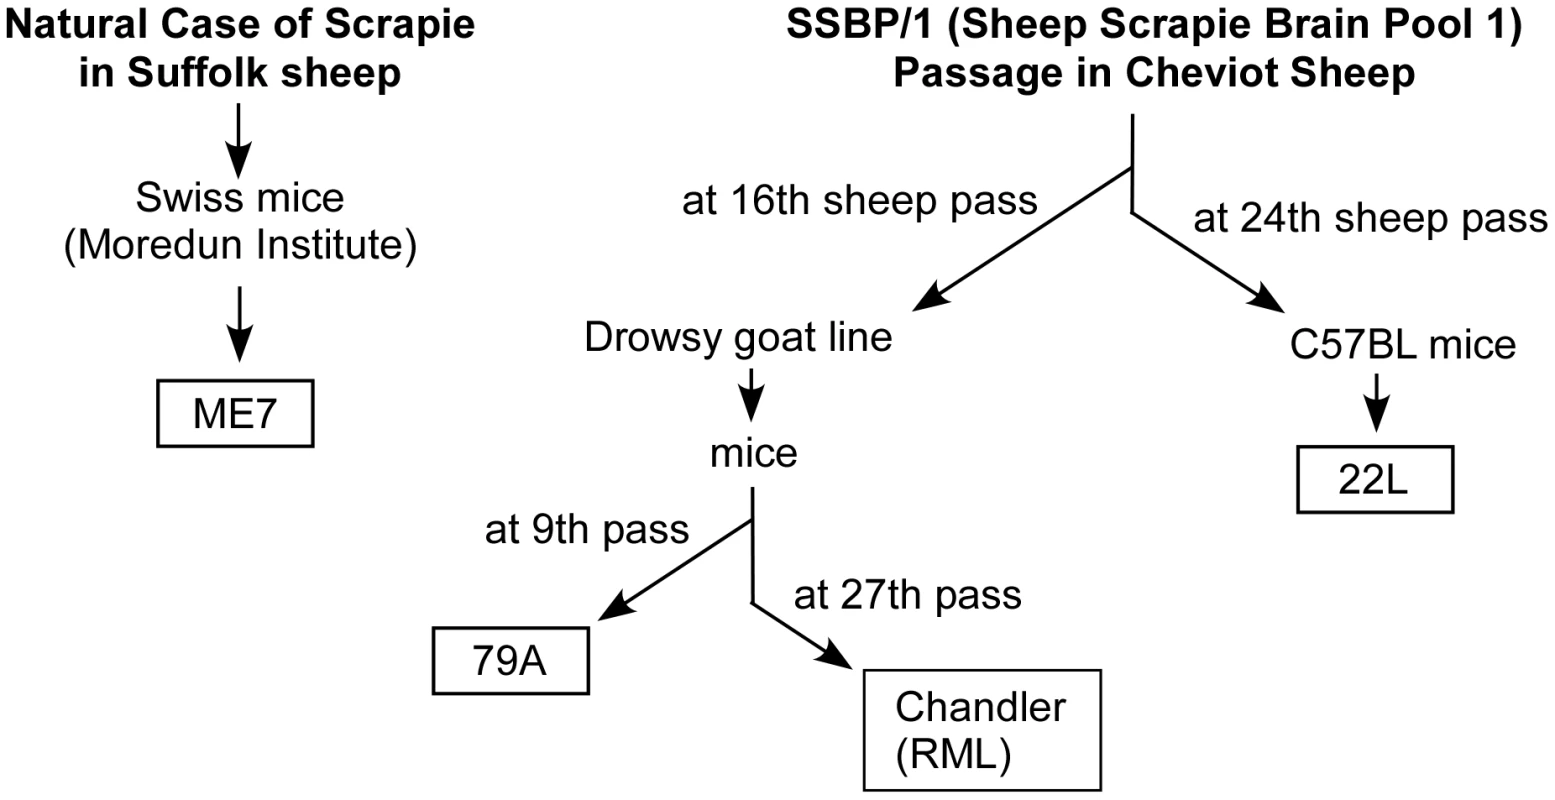 History of scrapie strains used.